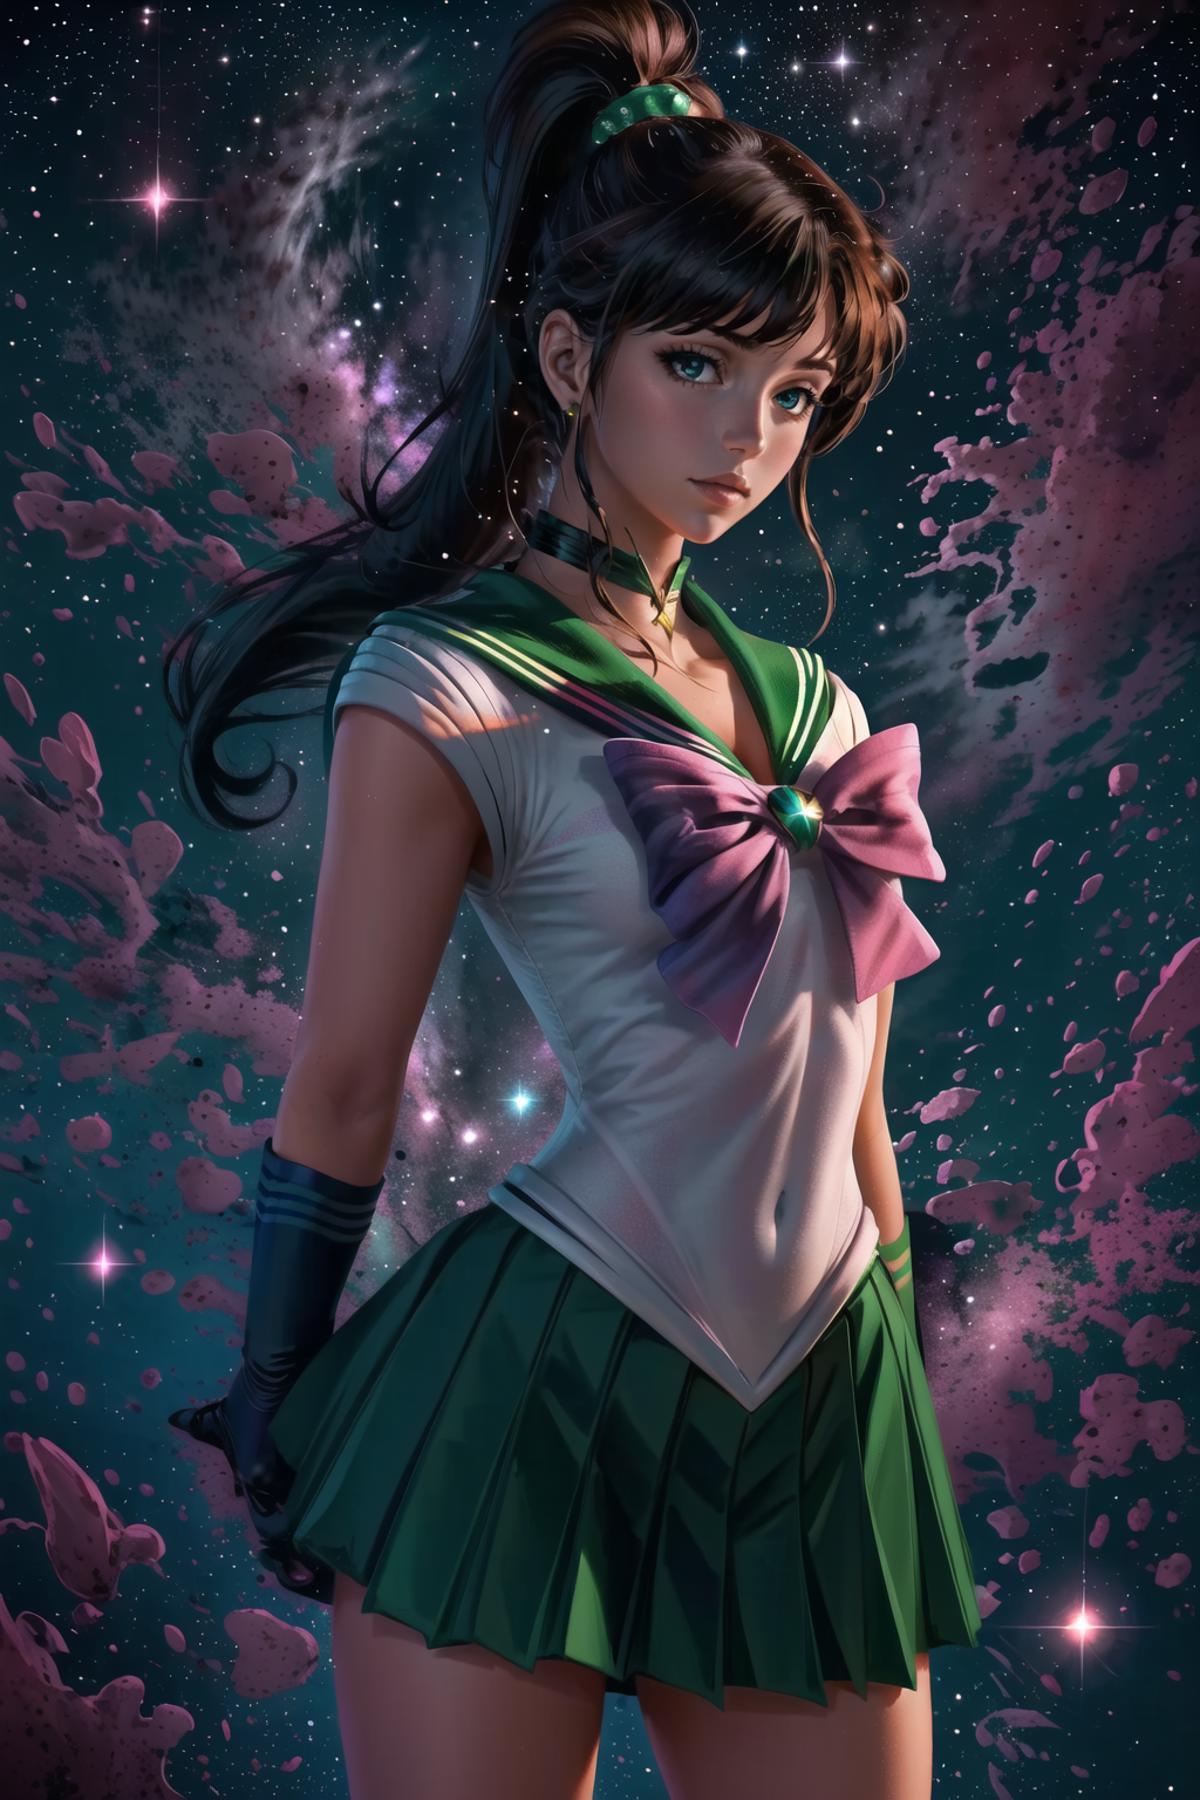 Sailor Jupiter | Sailor Moon image by FallenIncursio